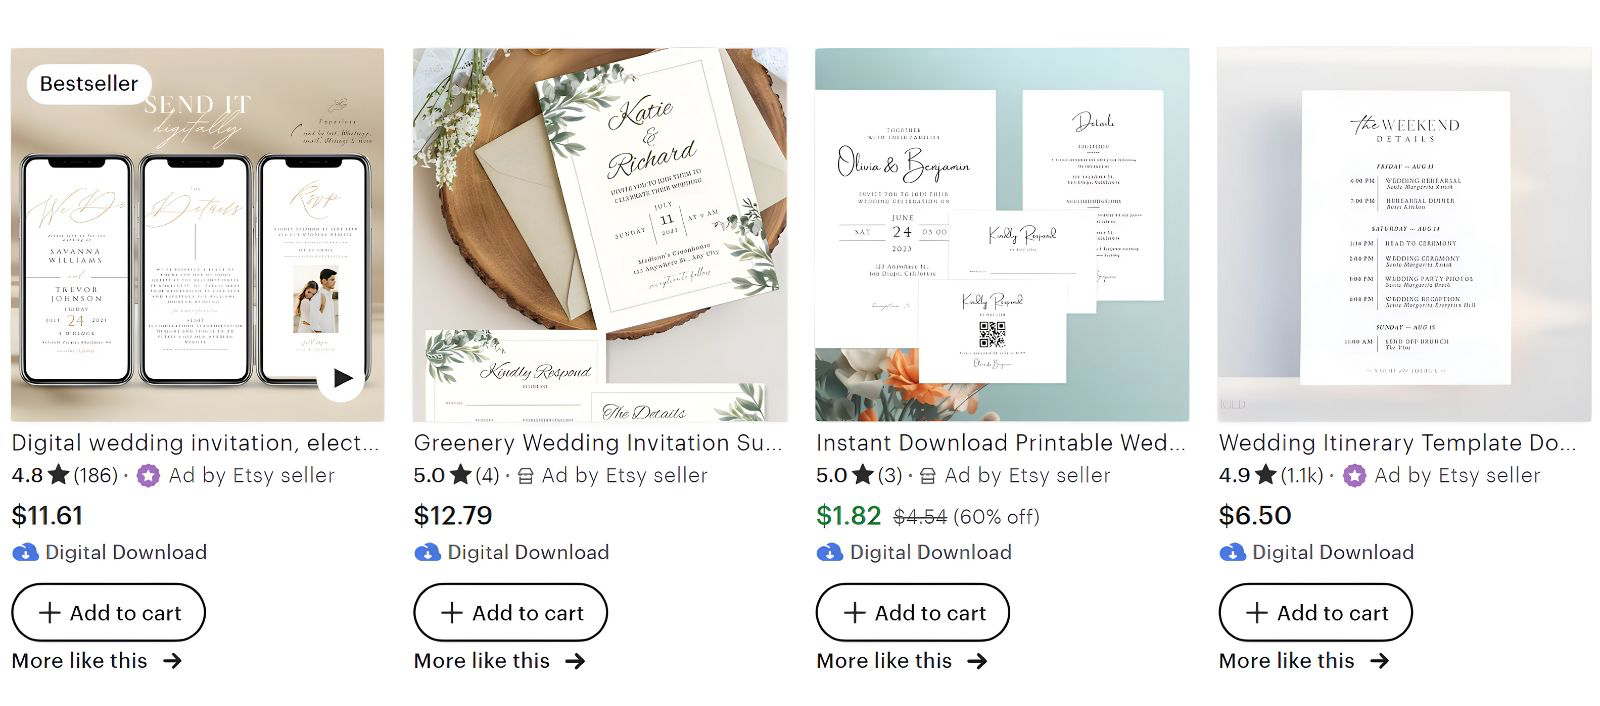 Printable wedding invitations on Etsy